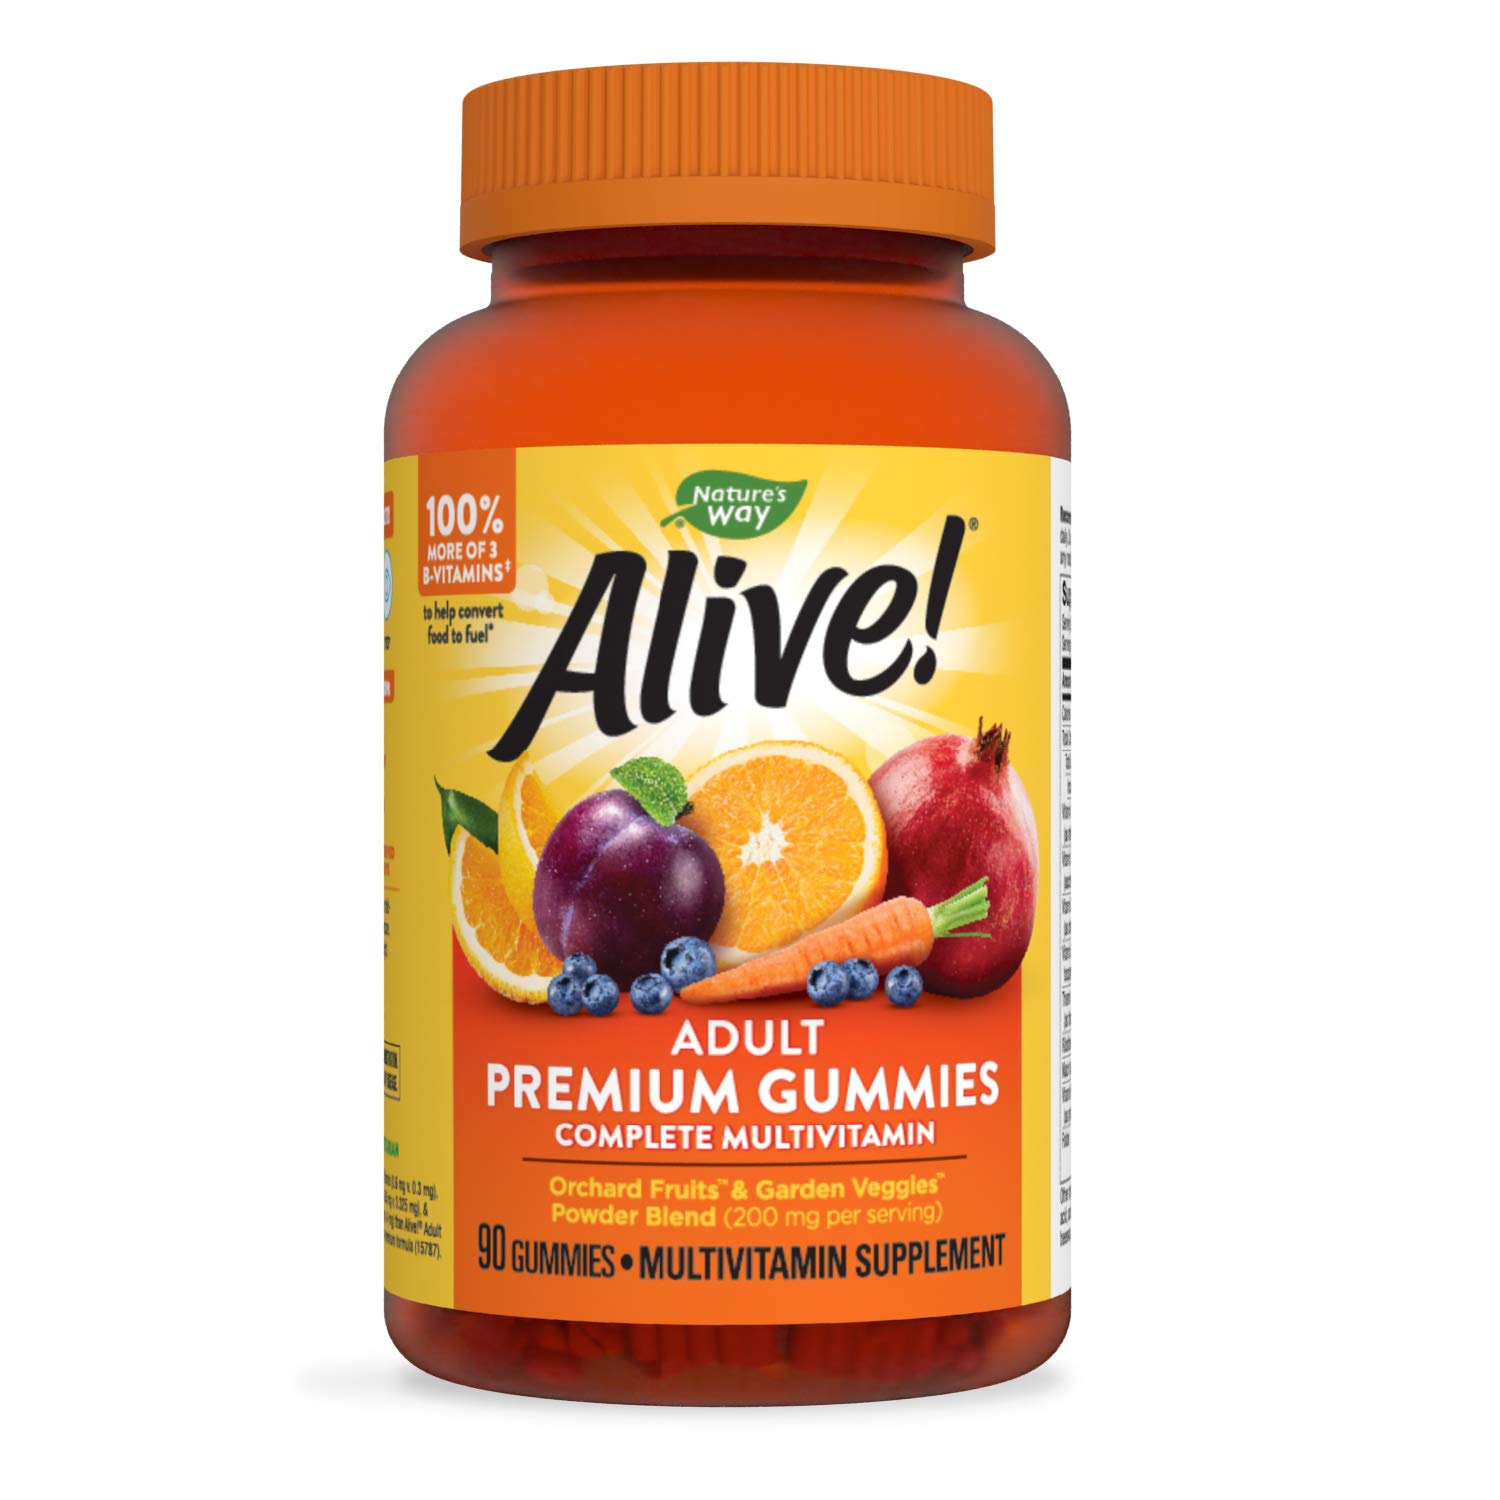 https://www.dontwasteyourmoney.com/wp-content/uploads/2021/11/natures-way-alive-fruit-veggies-blend-gummy-vitamin-90-count-gummy-vitamin.jpg